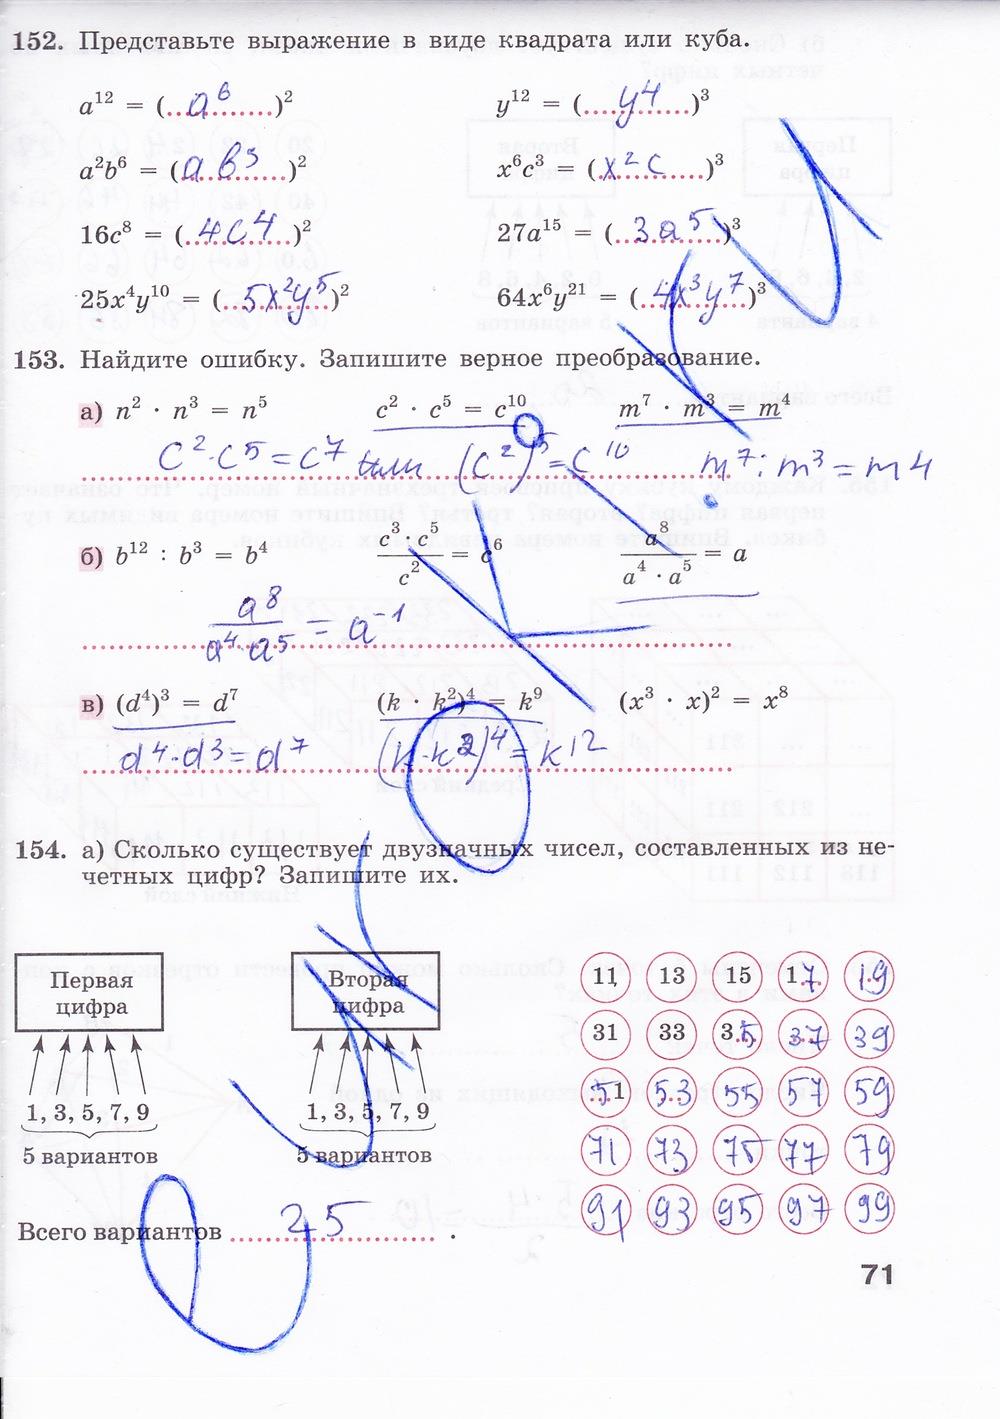 гдз 7 класс рабочая тетрадь страница 71 алгебра Минаева, Рослова